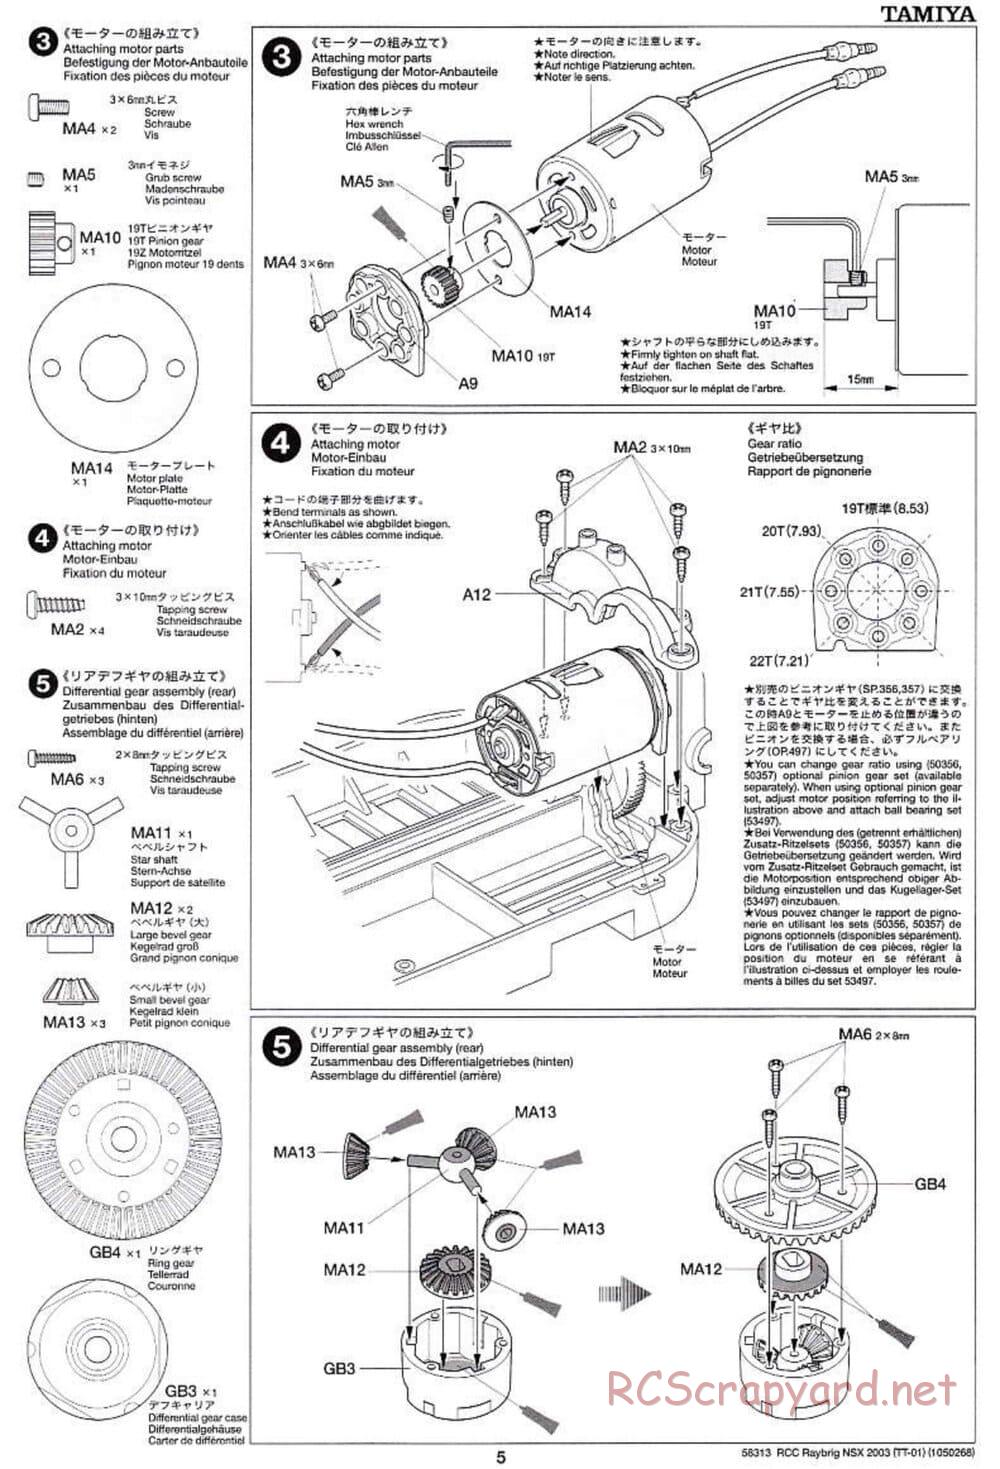 Tamiya - Raybrig NSX 2003 - TT-01 Chassis - Manual - Page 5